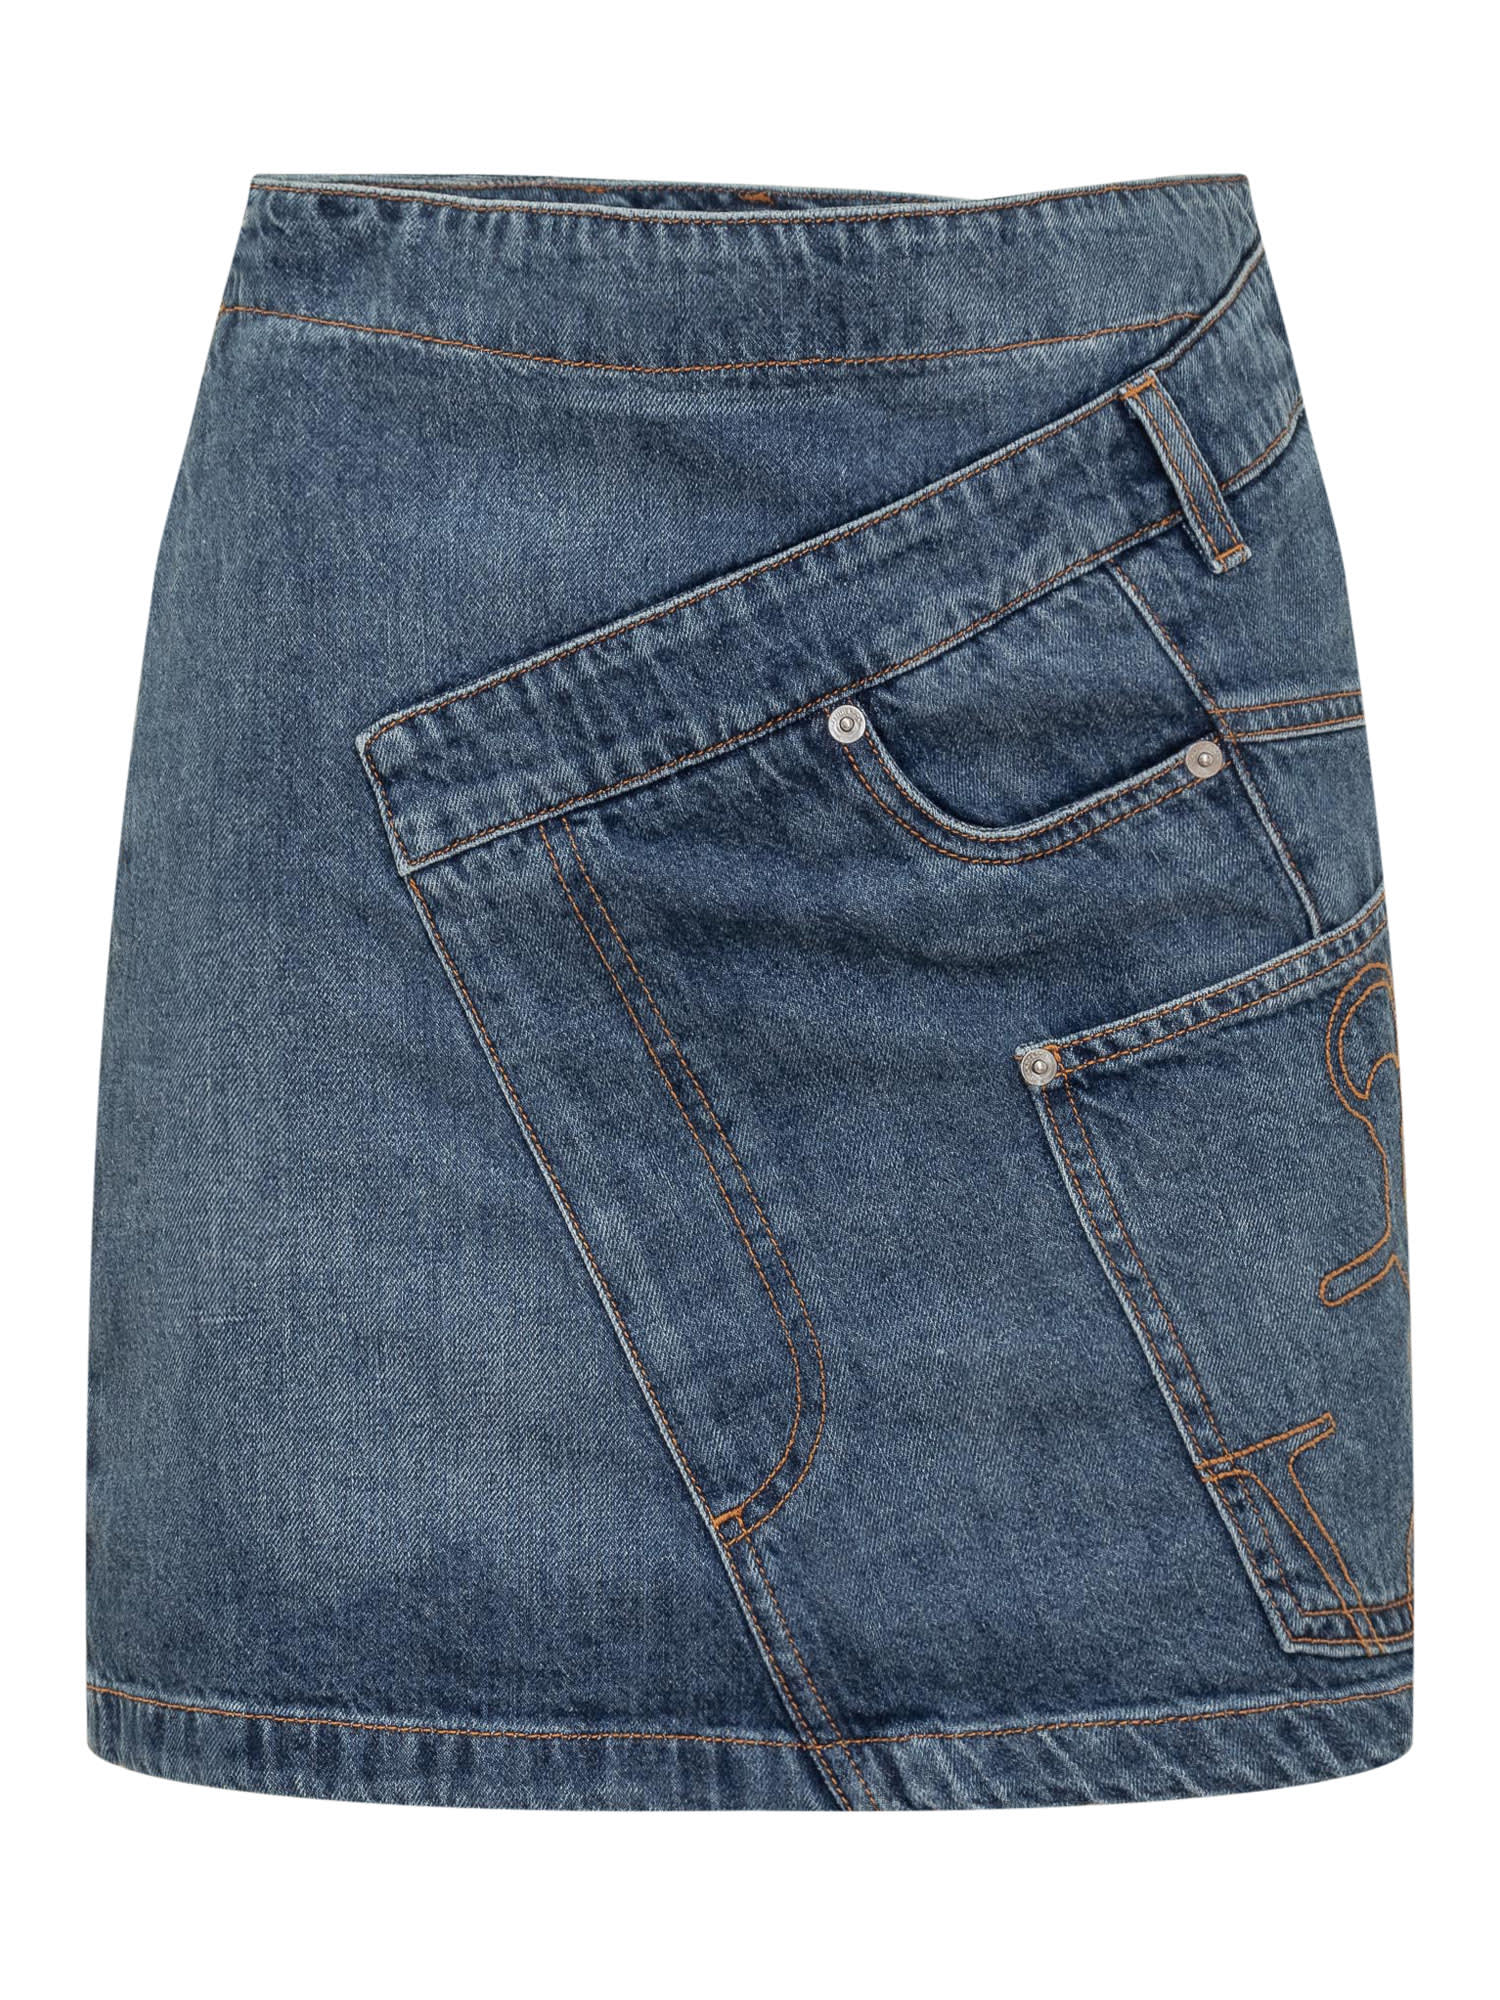 Shop Jw Anderson Twistwd Mini Skirt In Light Blue